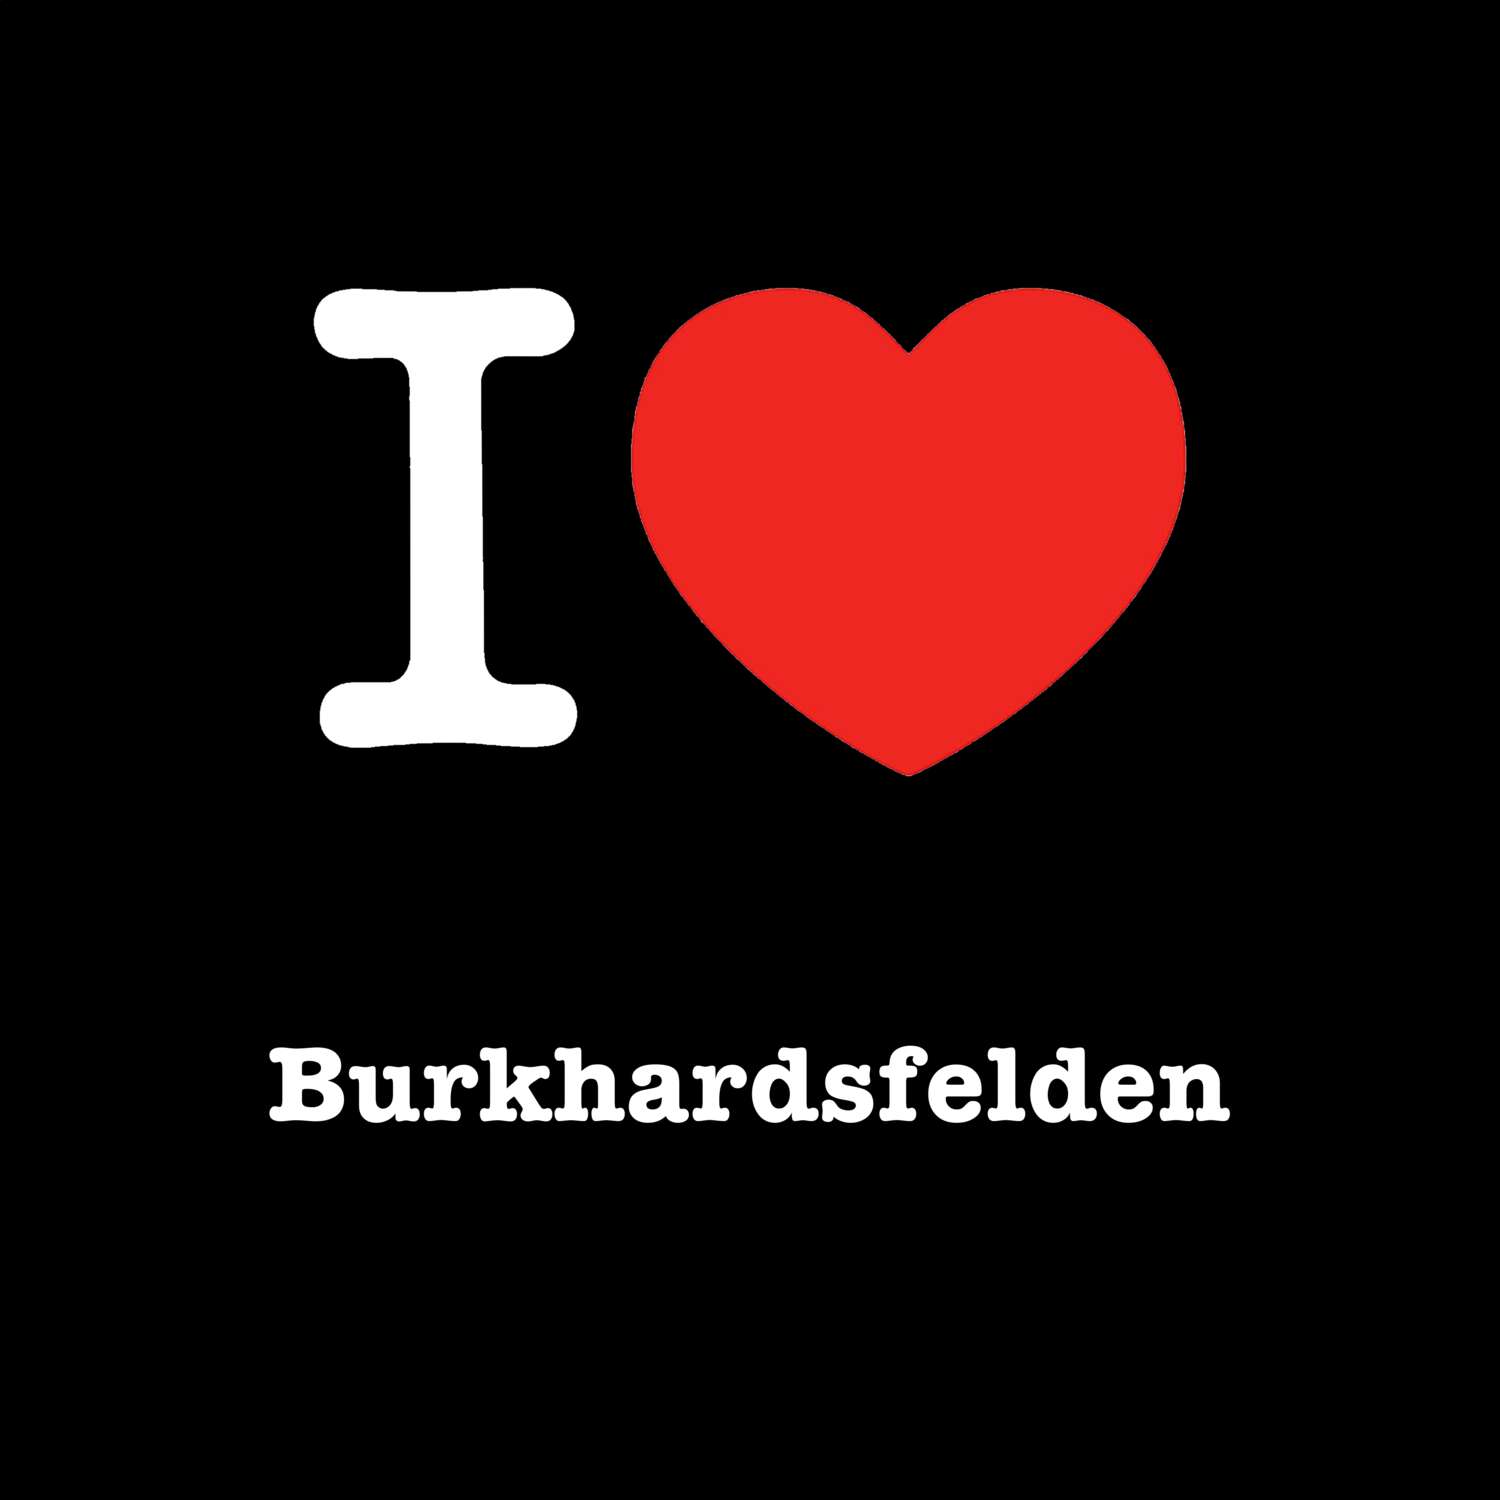 Burkhardsfelden T-Shirt »I love«